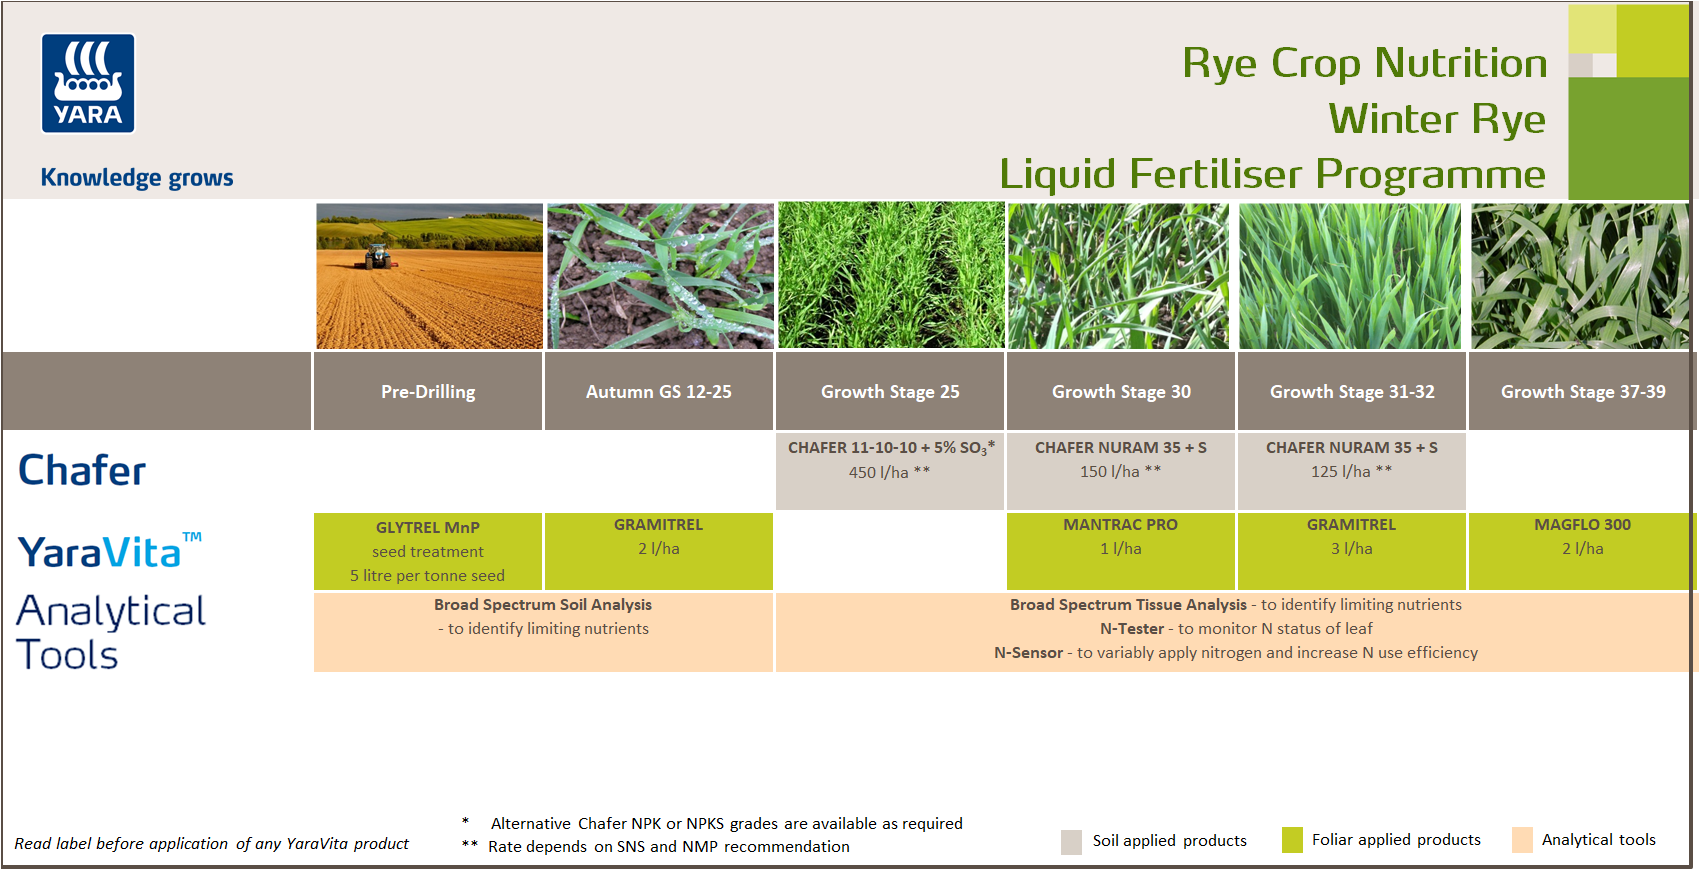 Rye liquid fertiliser programme